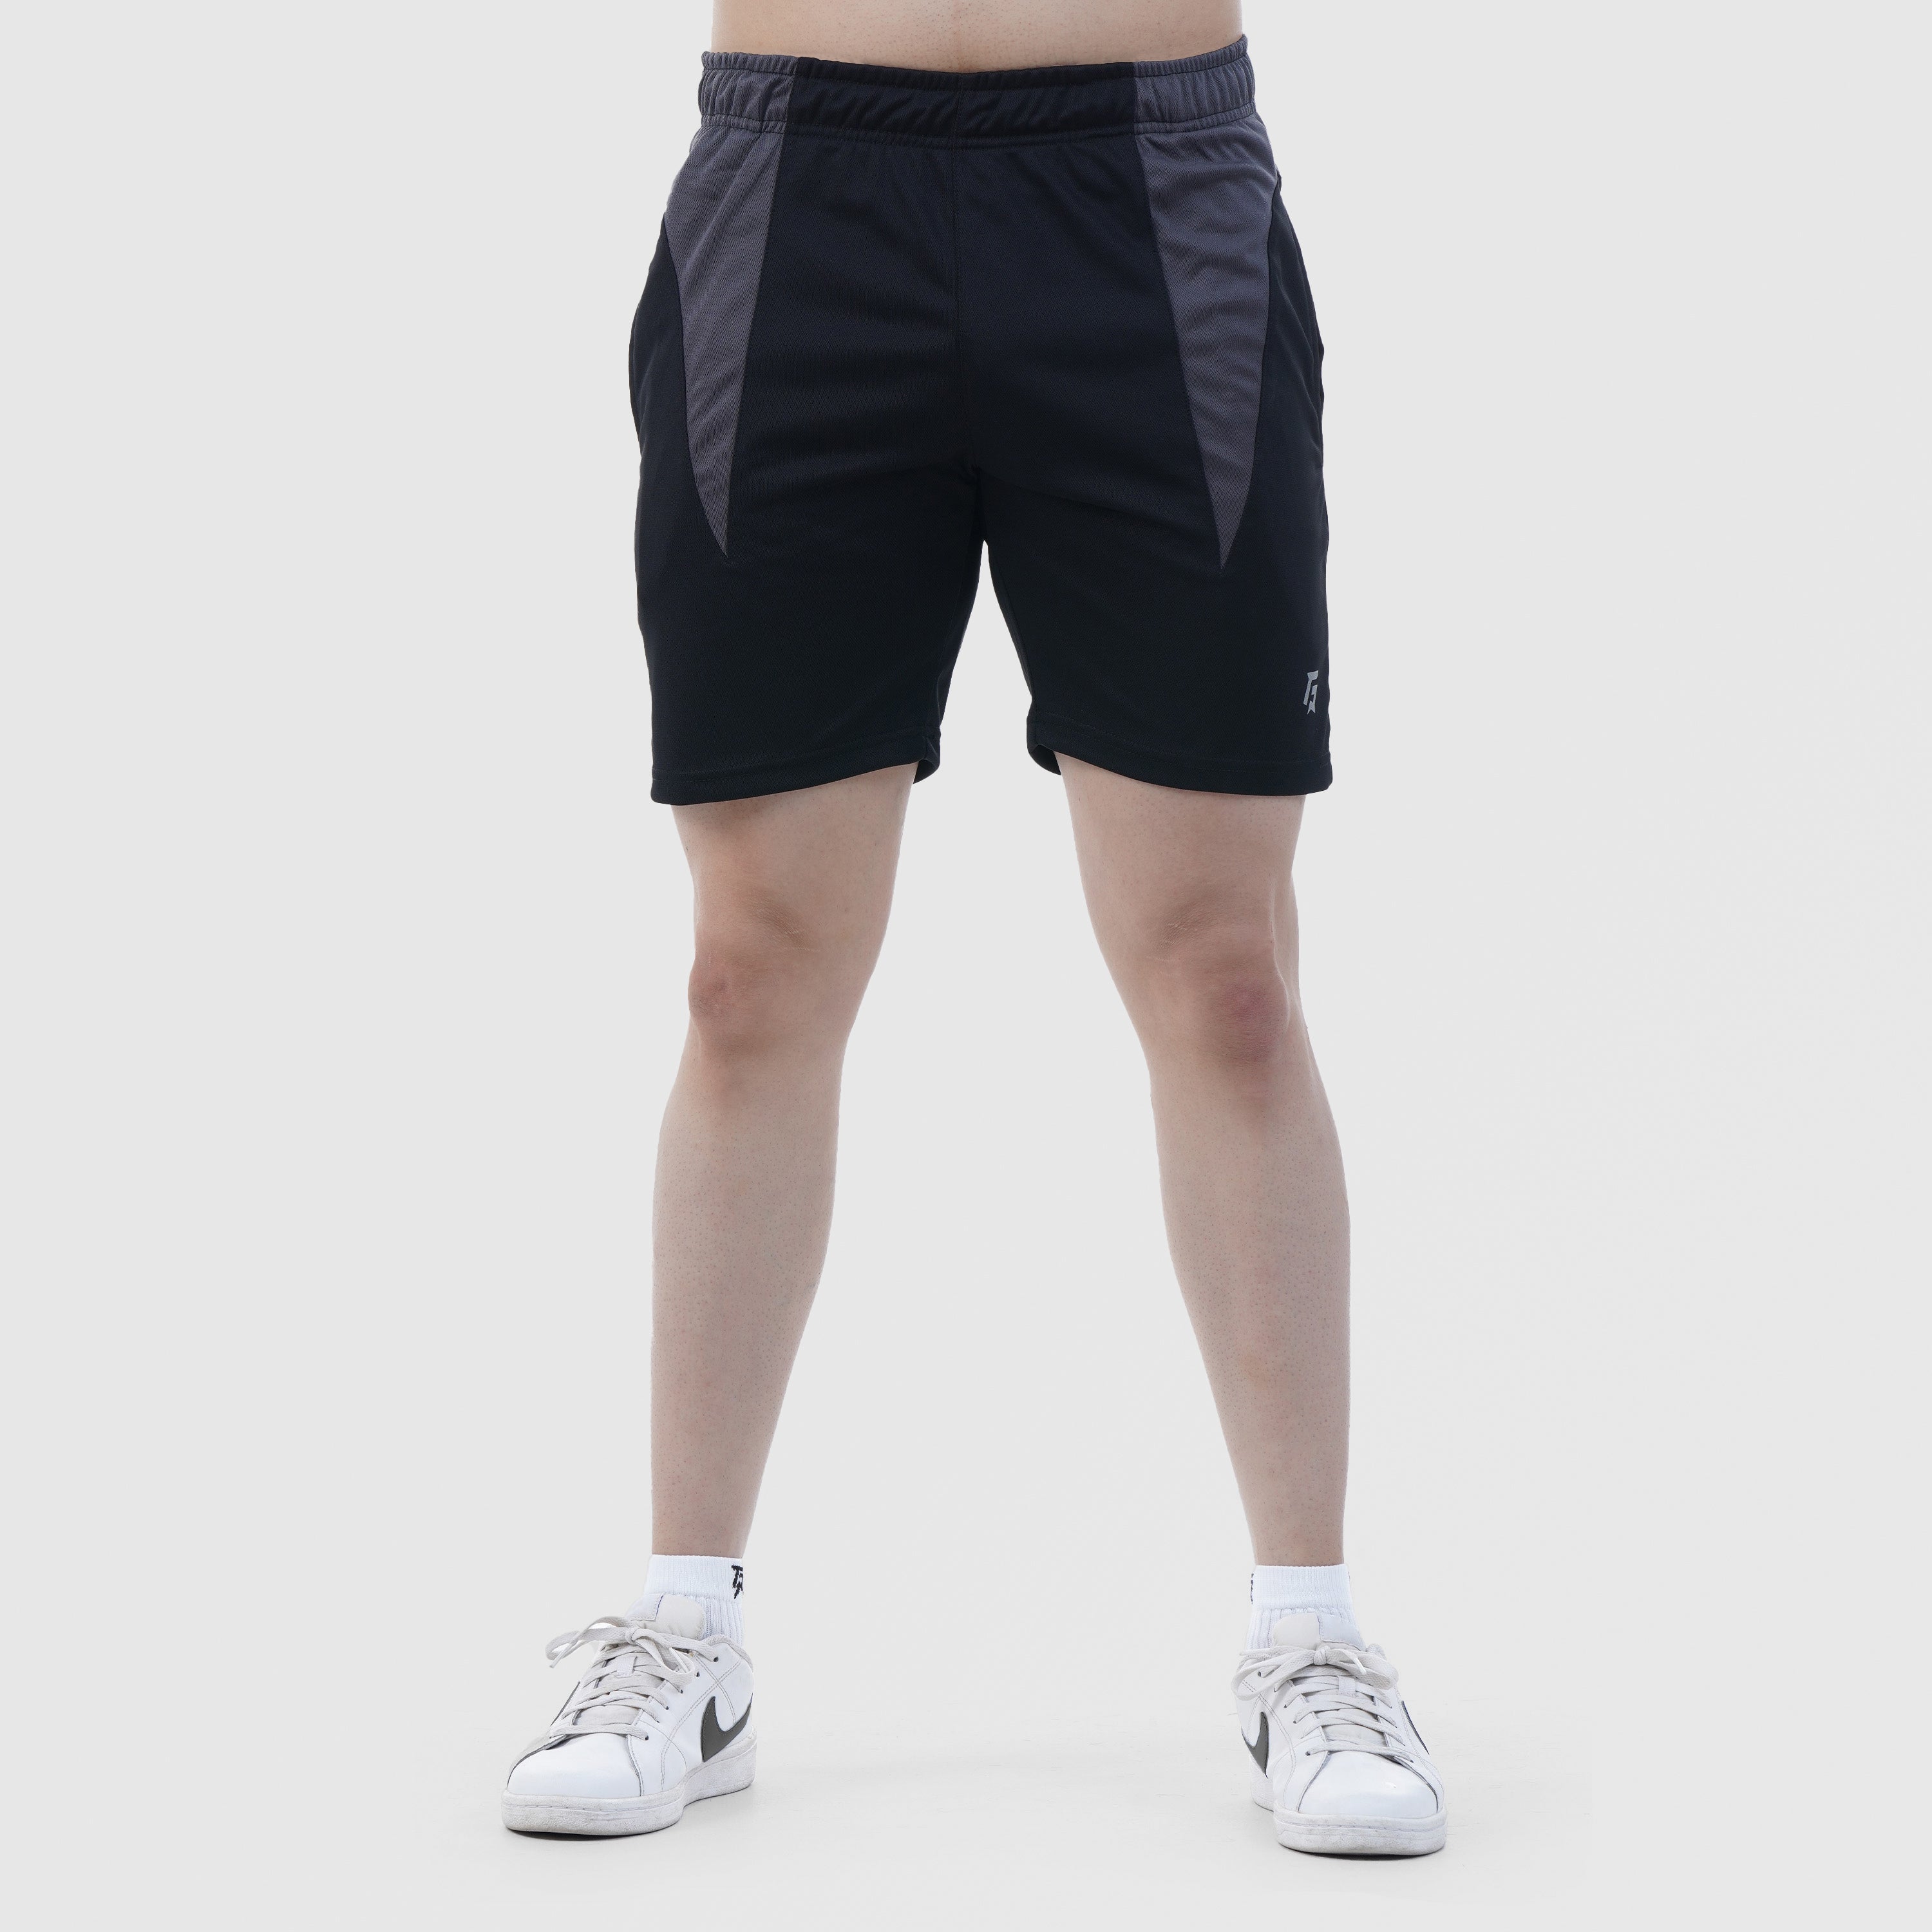 ActiveFlow Shorts (Black)